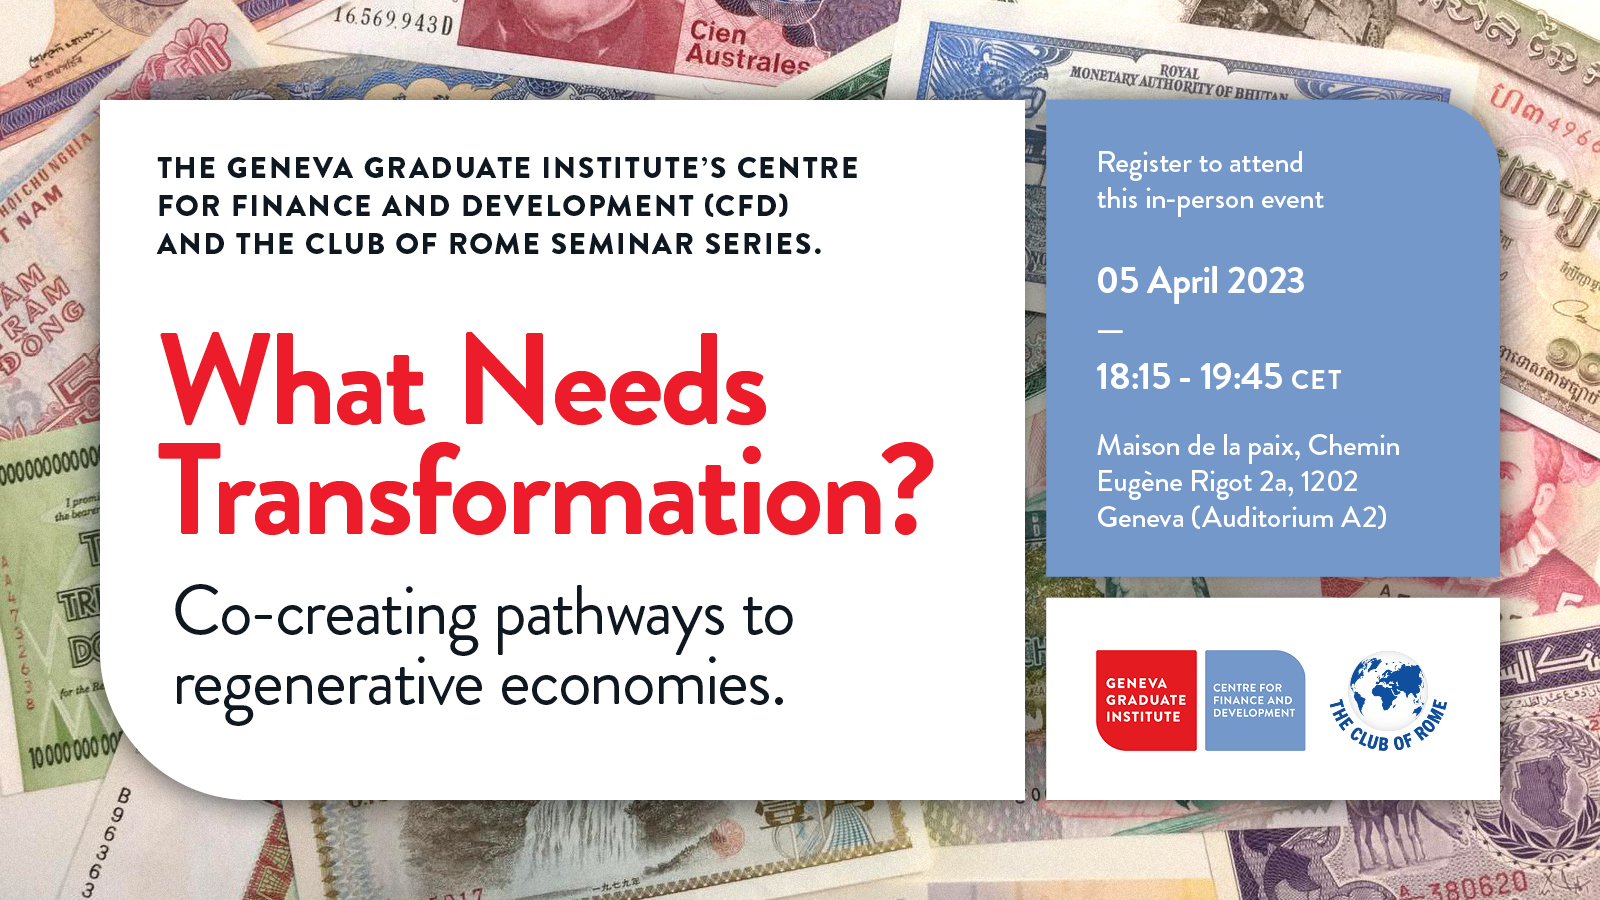 What needs transformation? Co-creating pathways to regenerative economies